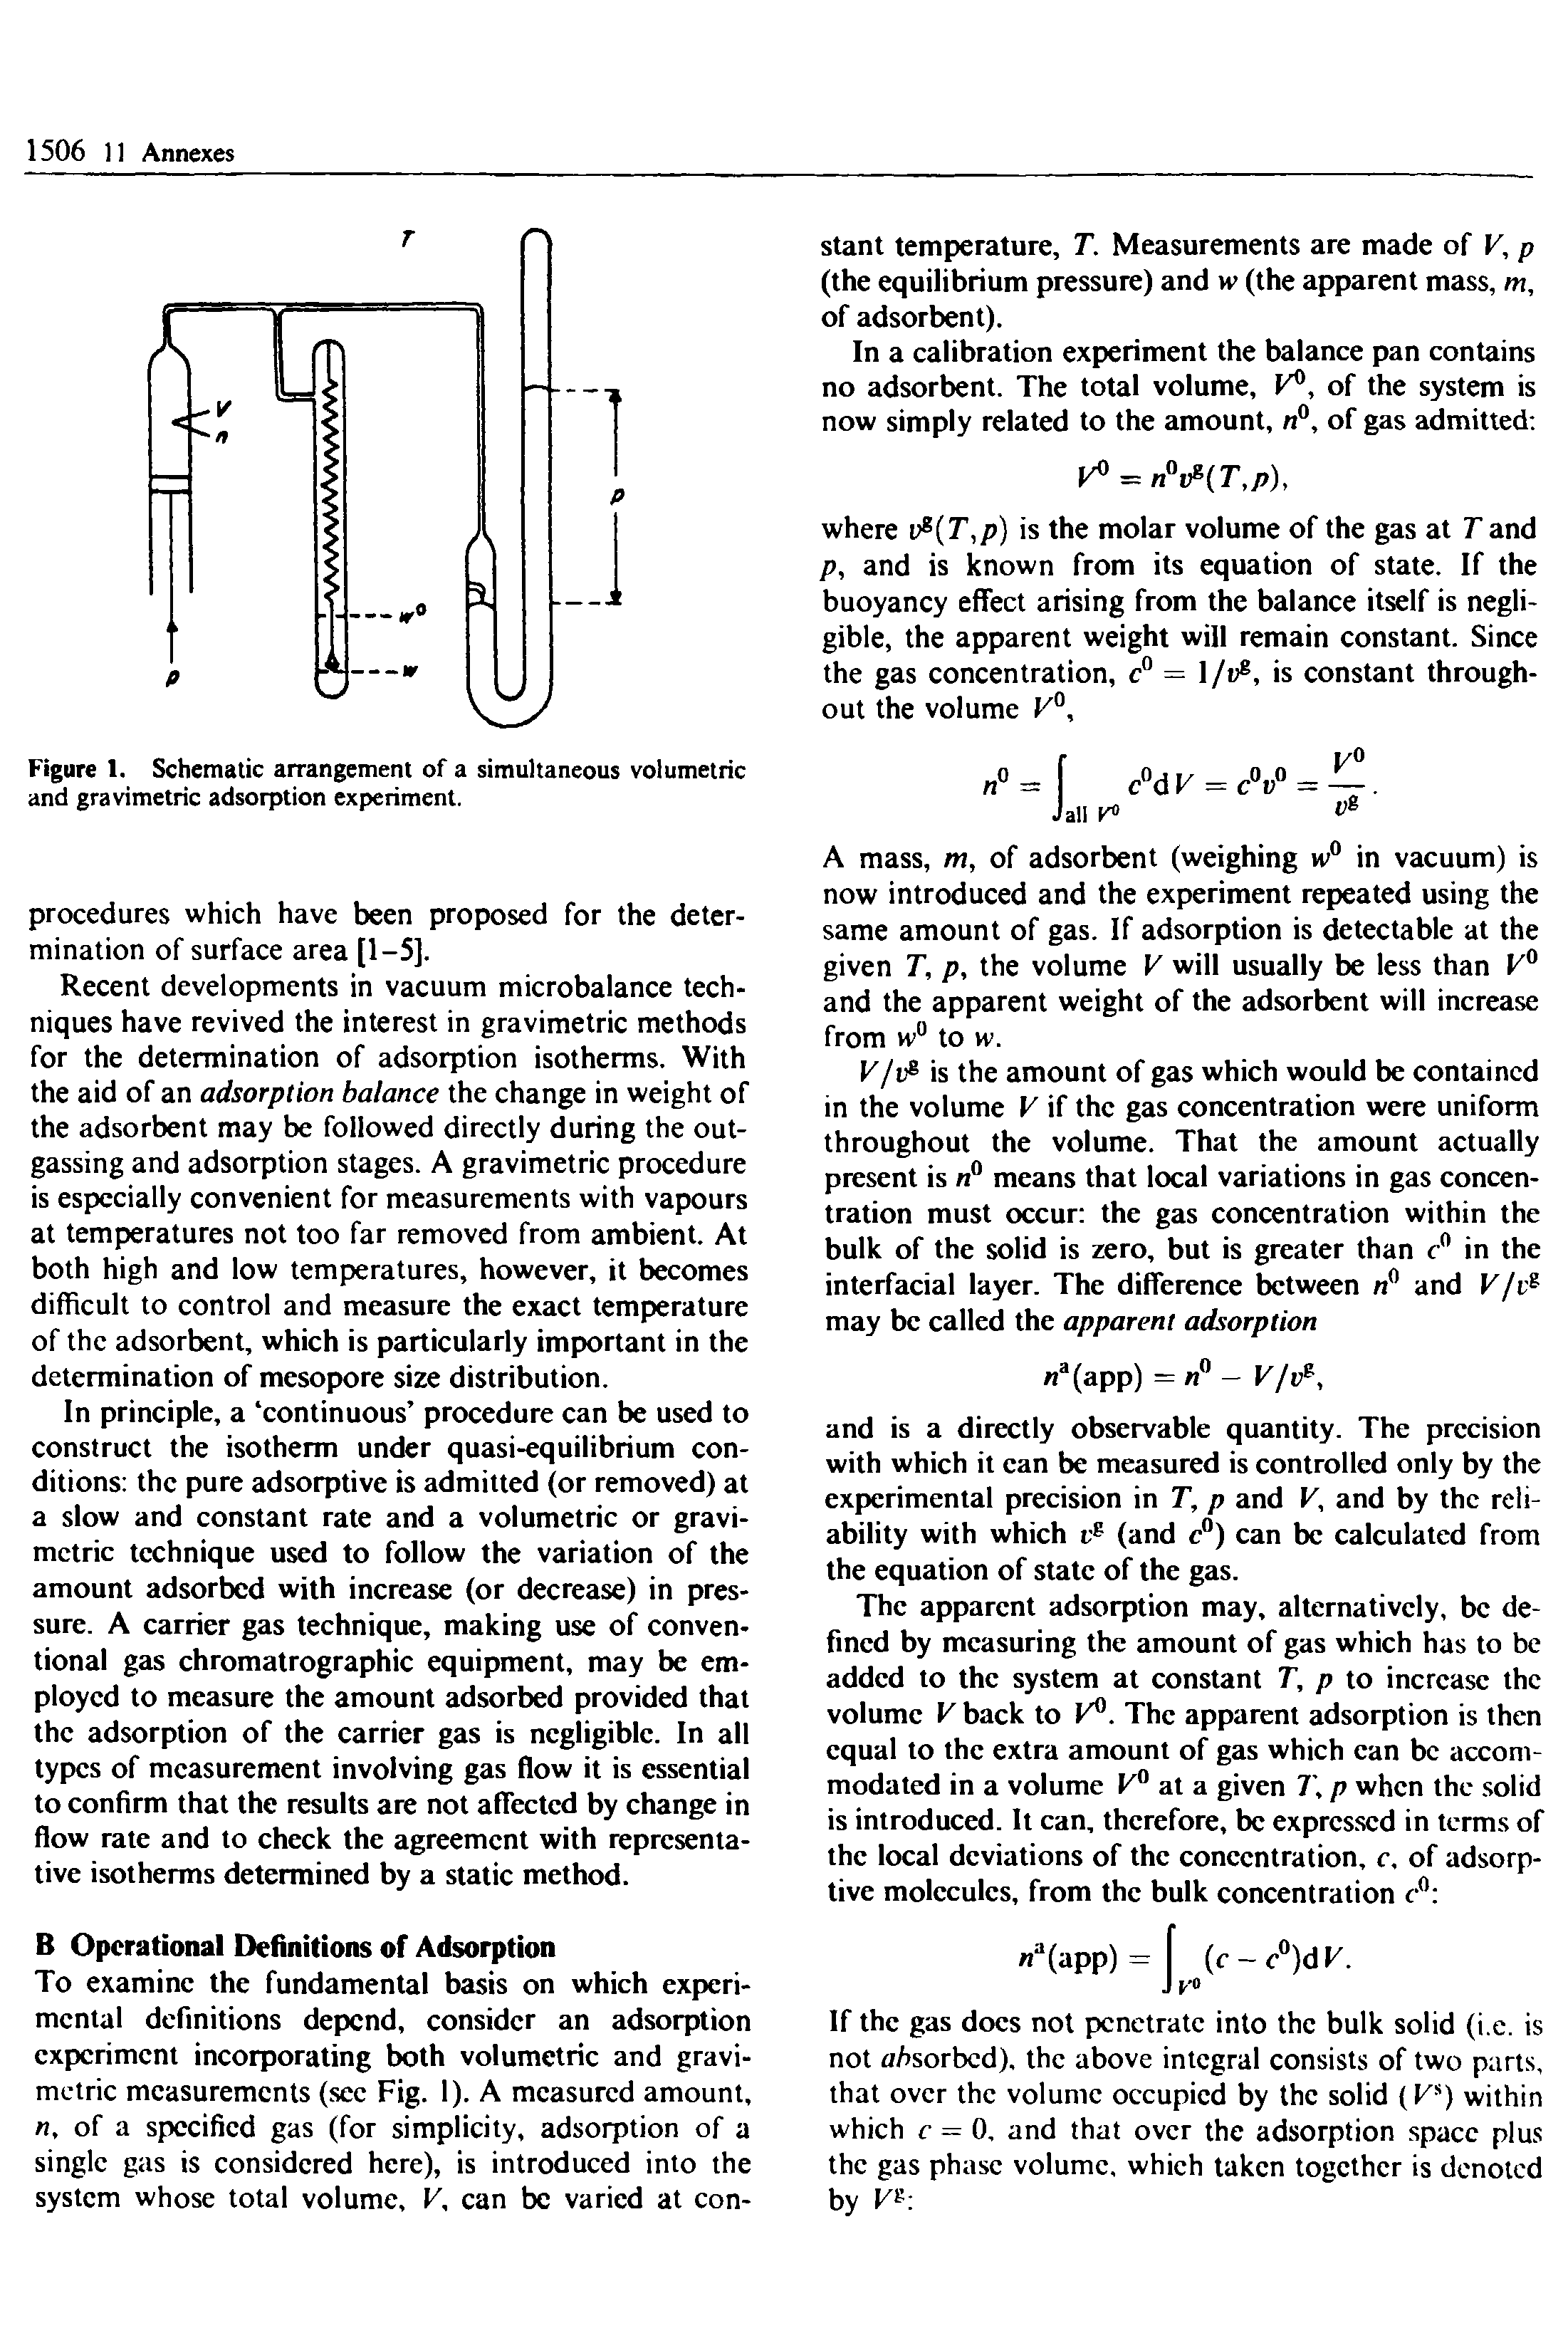 Figure 1. Schematic arrangement of a simultaneous volumetric and gravimetric adsorption experiment.